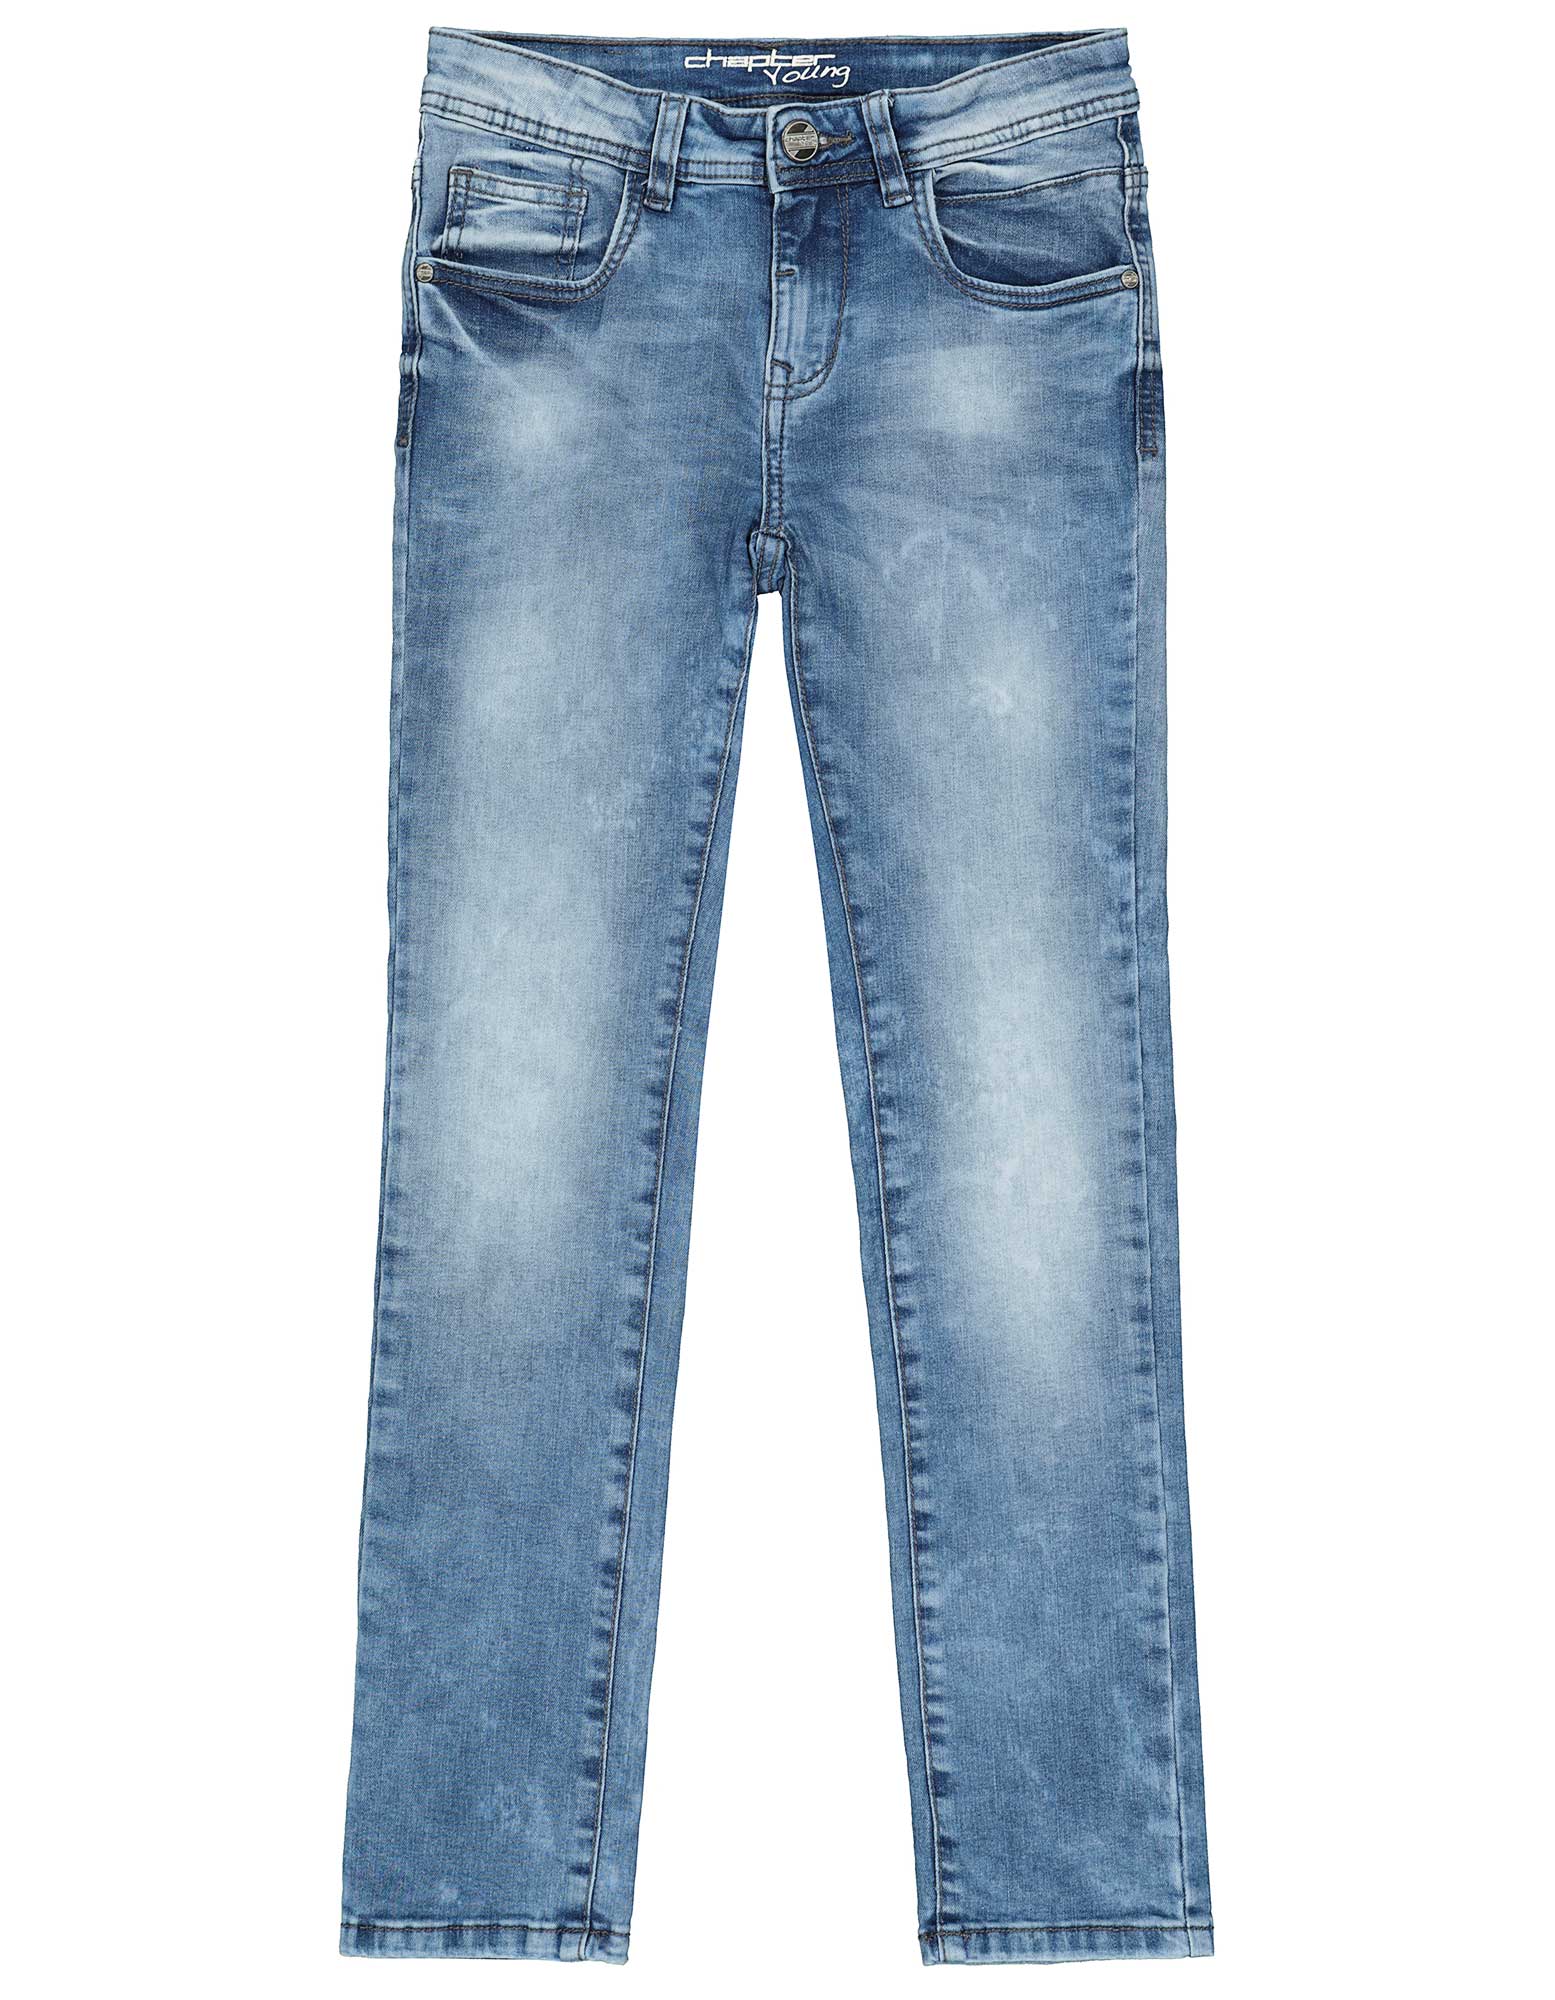 Herren Slim Fit Jeans im Stone Washed-Look - Takko Fashion